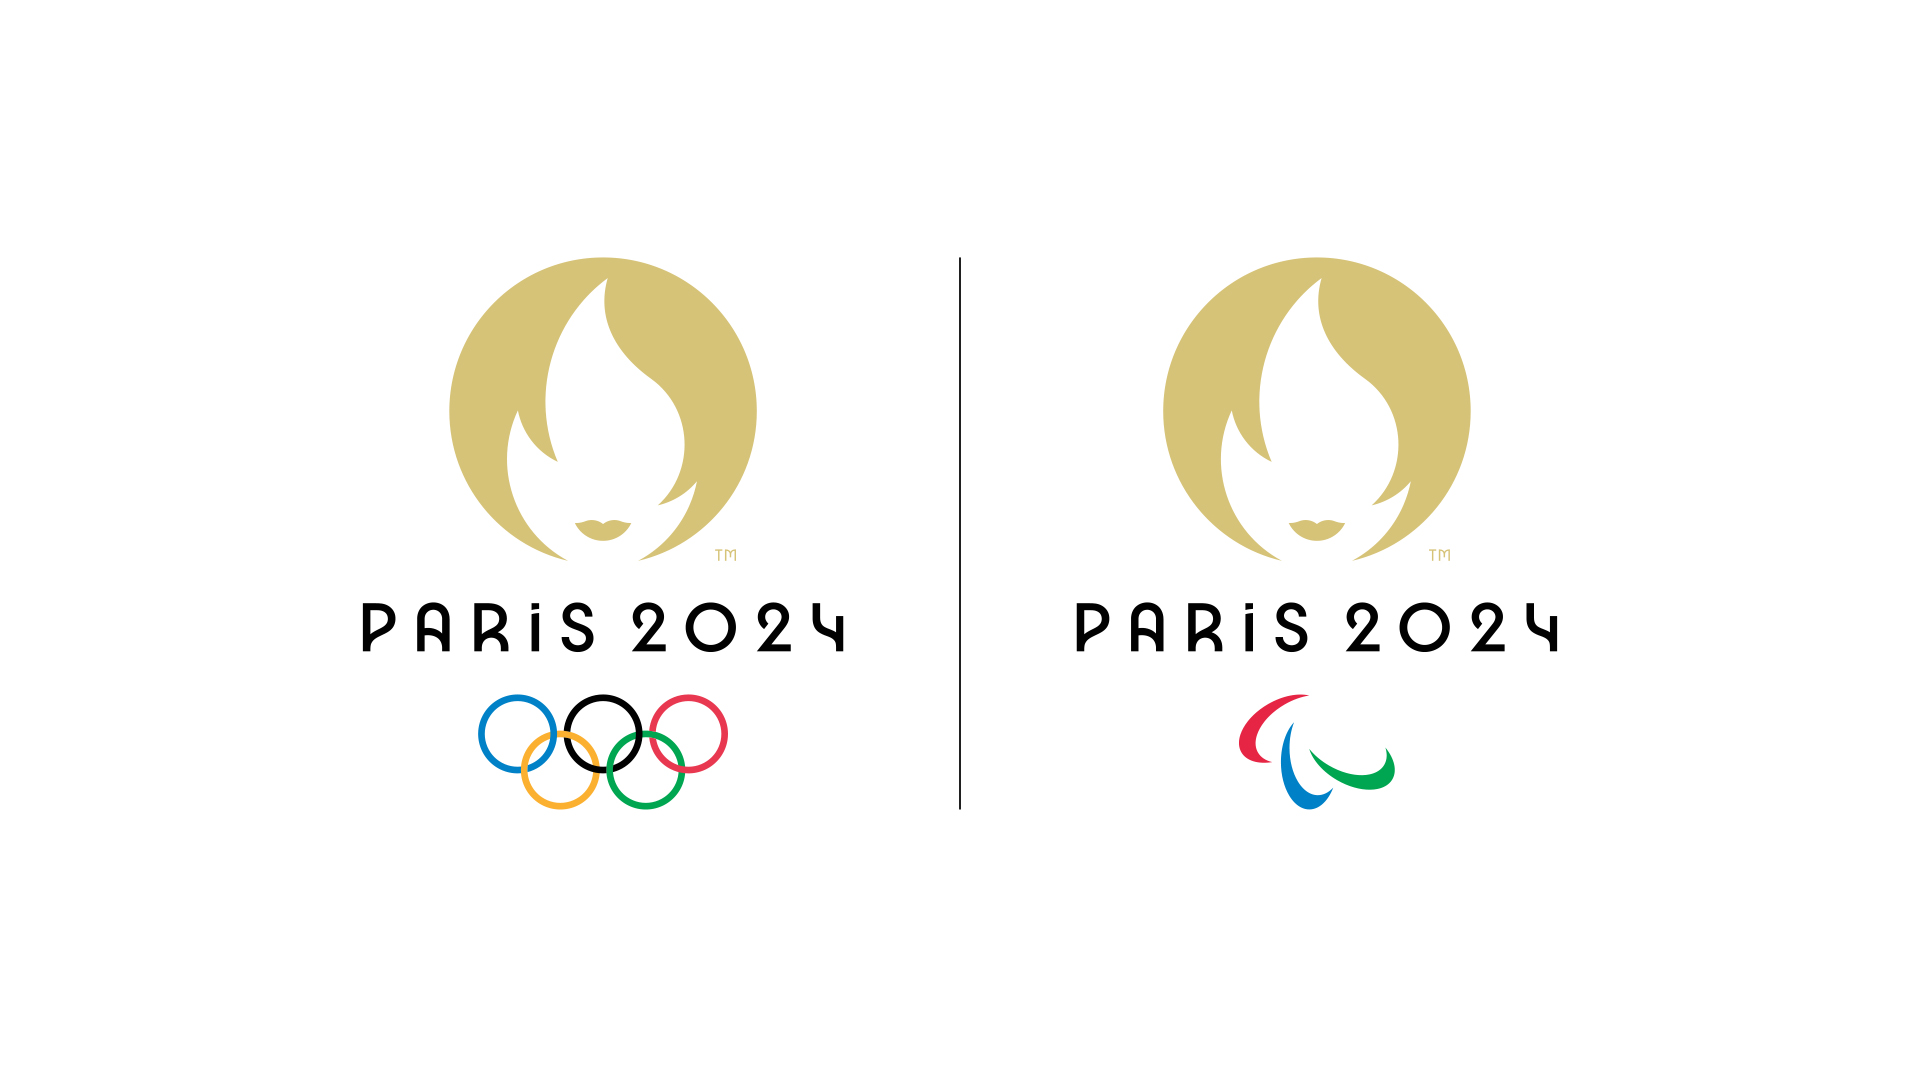 Paris 2024 logo presents “a homage to female athletes”